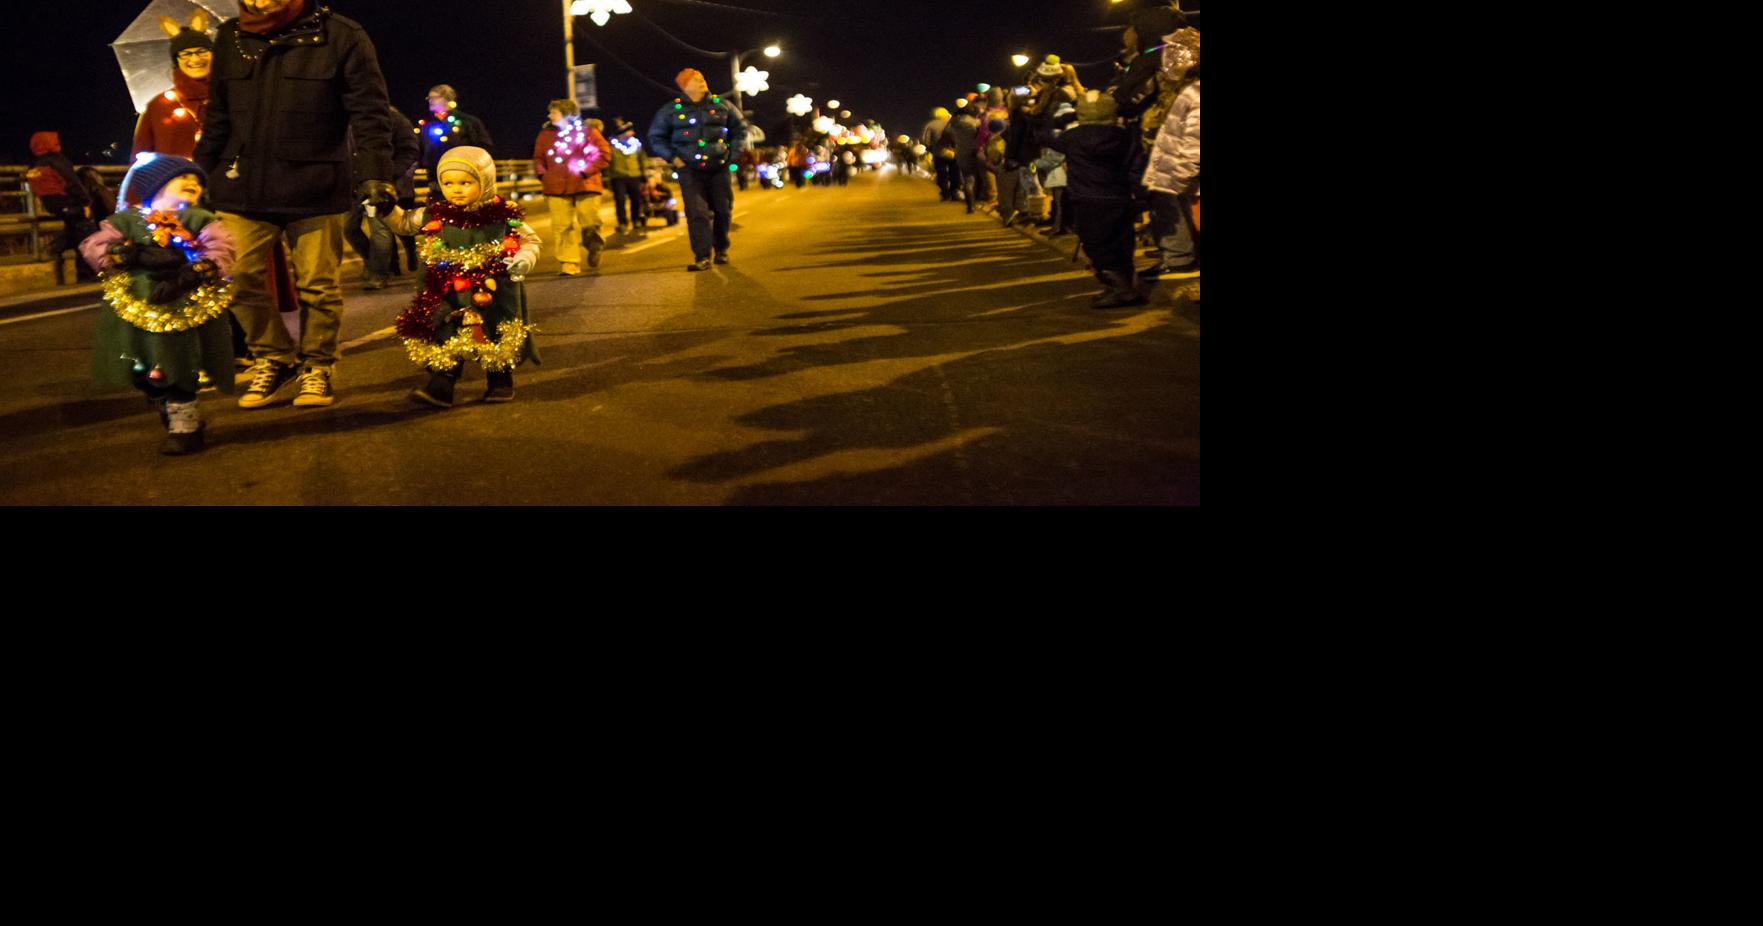 Missoula kicks off holiday season with Parade of Lights